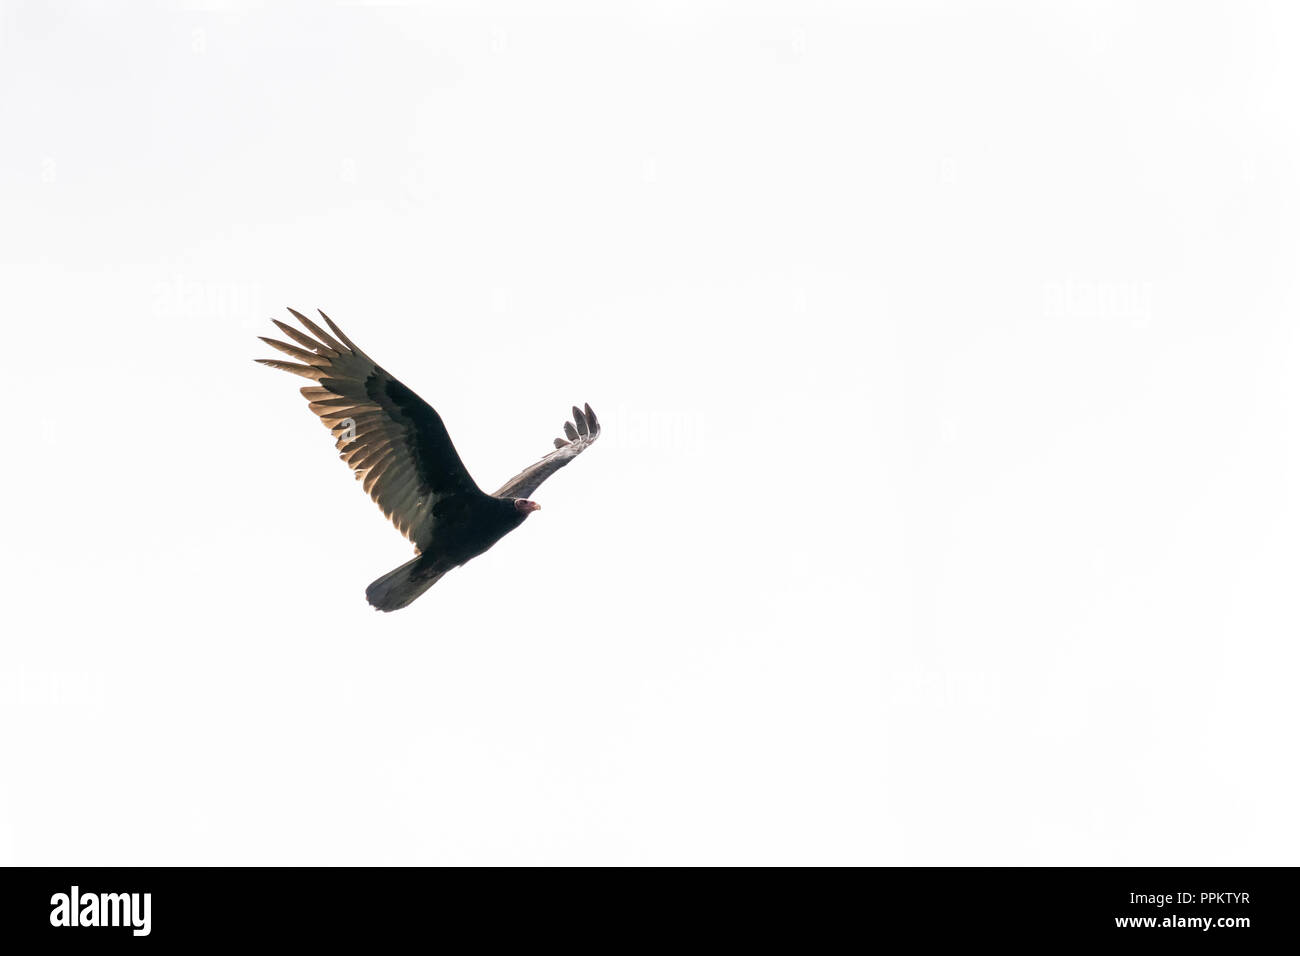 Pacaya Samiria Reserve, Peru, South America.  Black Vulture in flight by the Ucayali River in the Amazon basin. Stock Photo